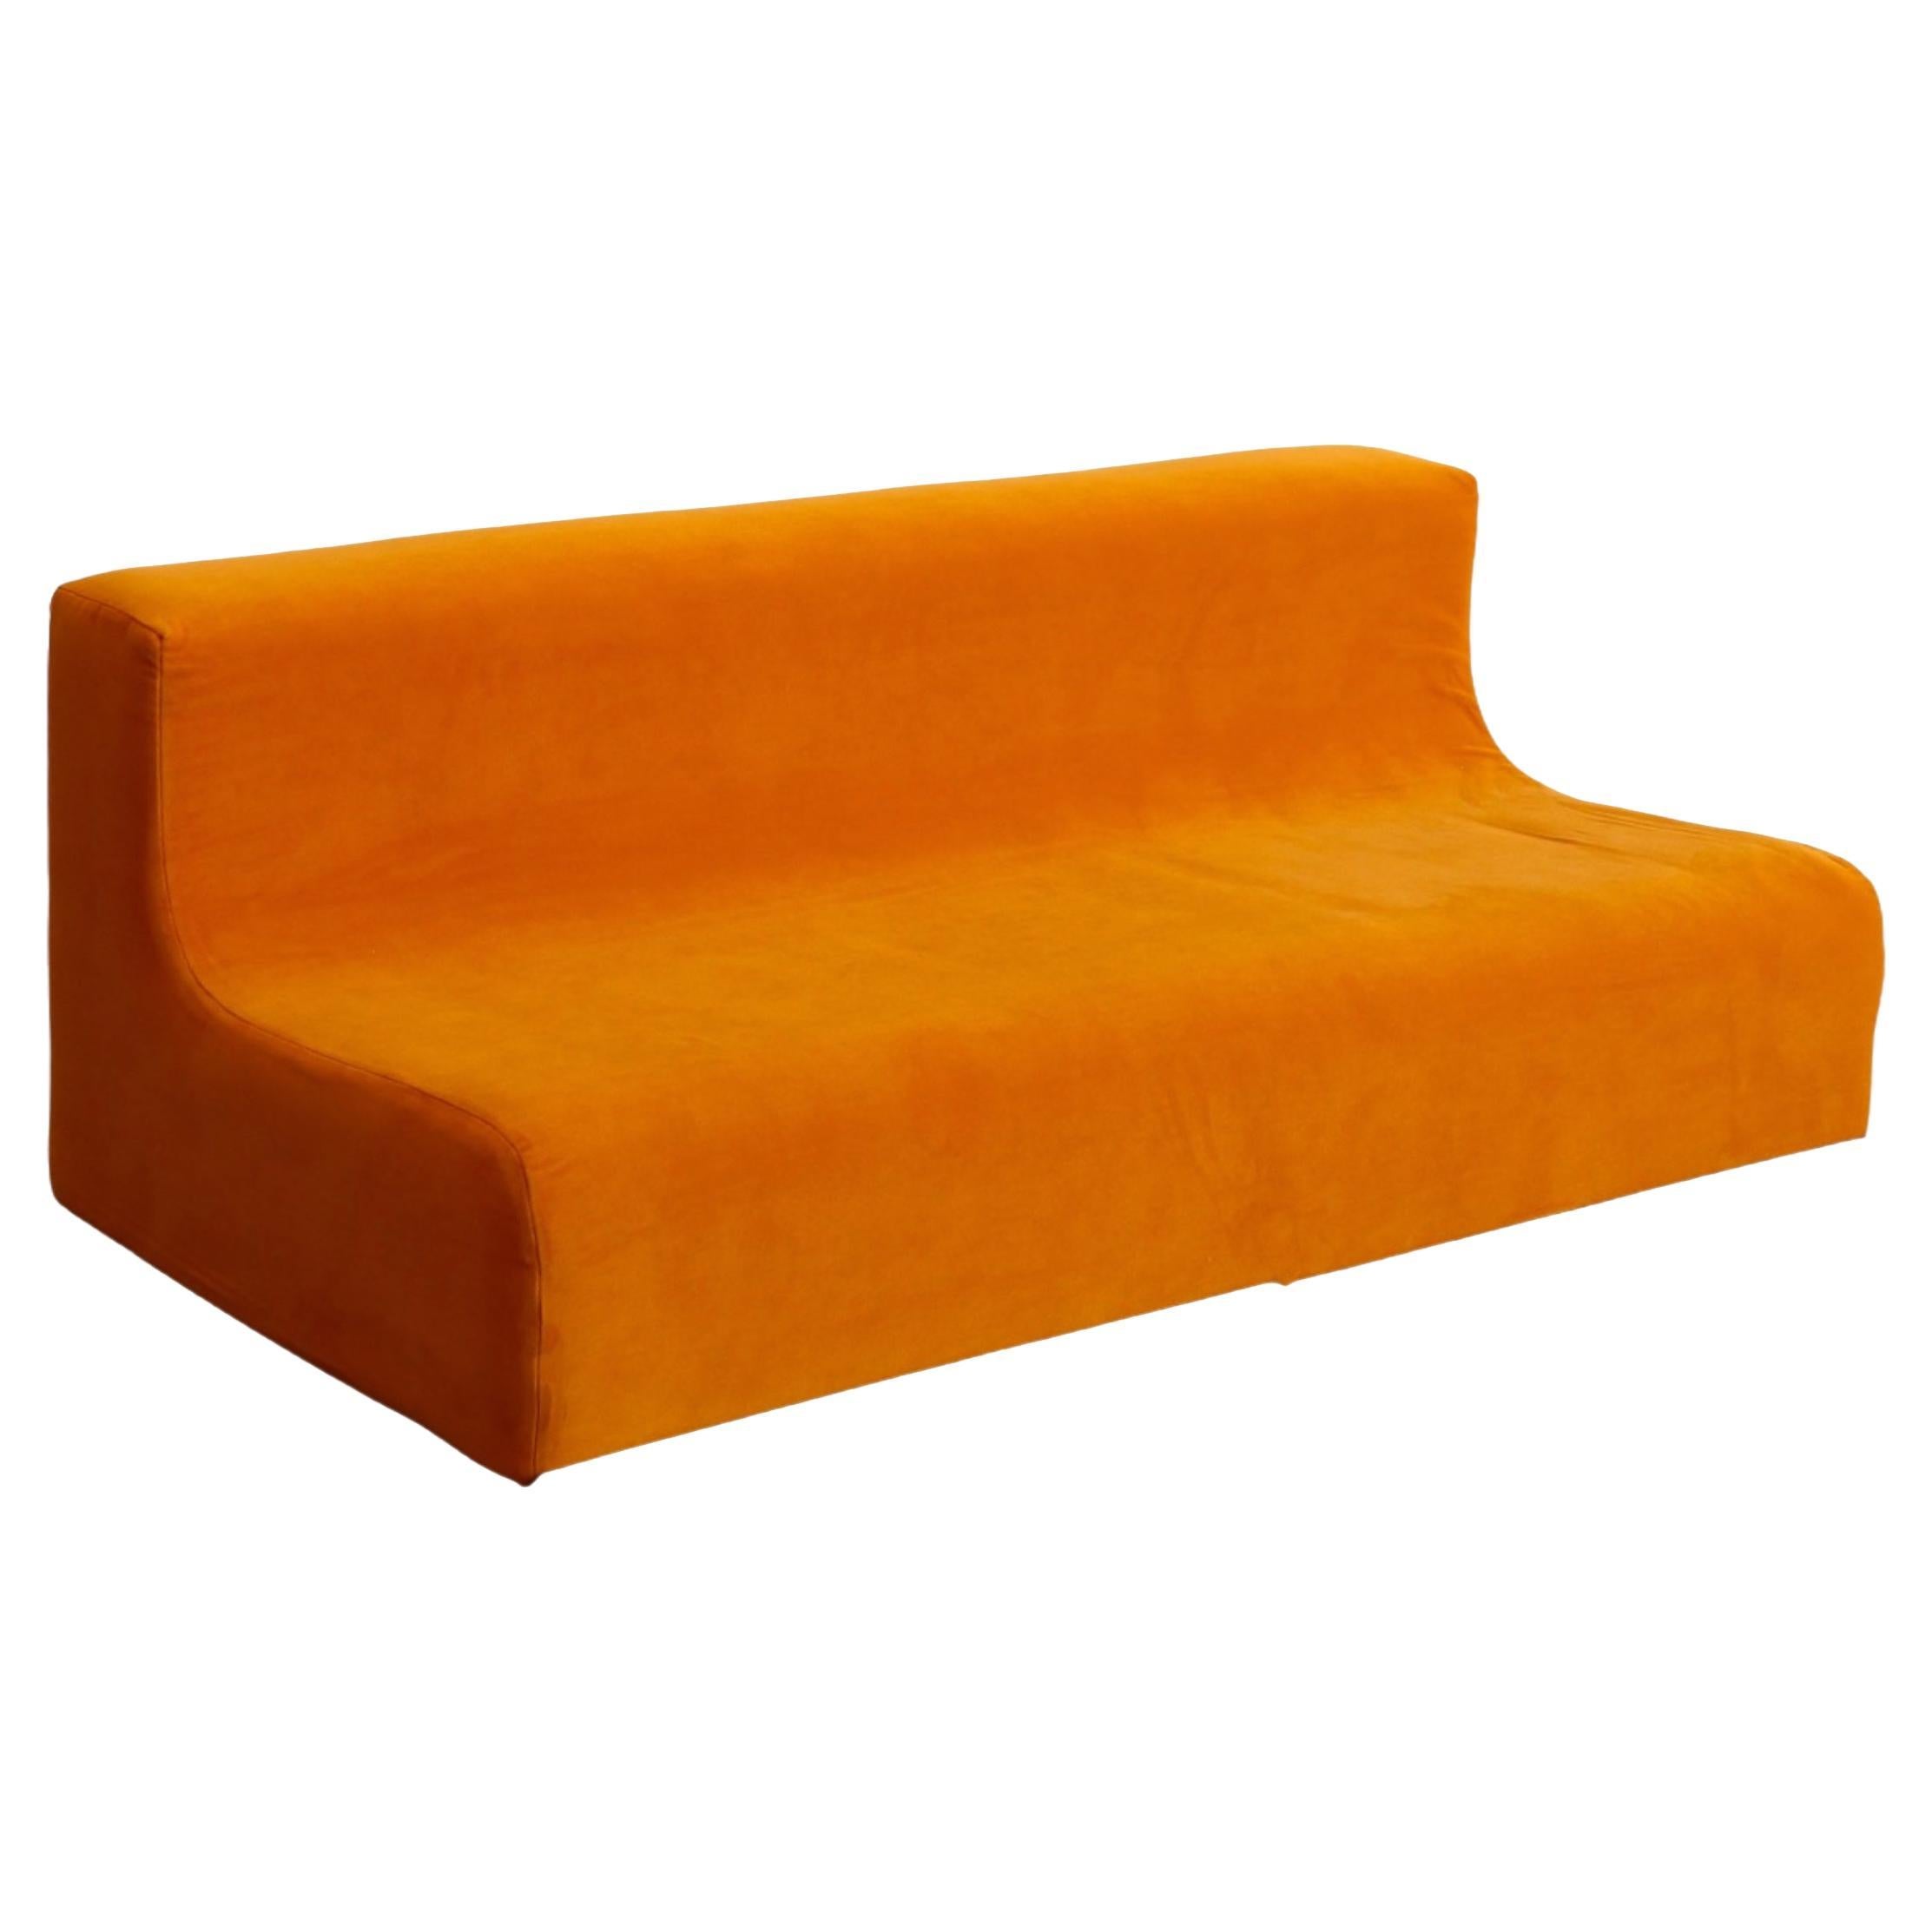 Space Age Three Seater Orange Sofa